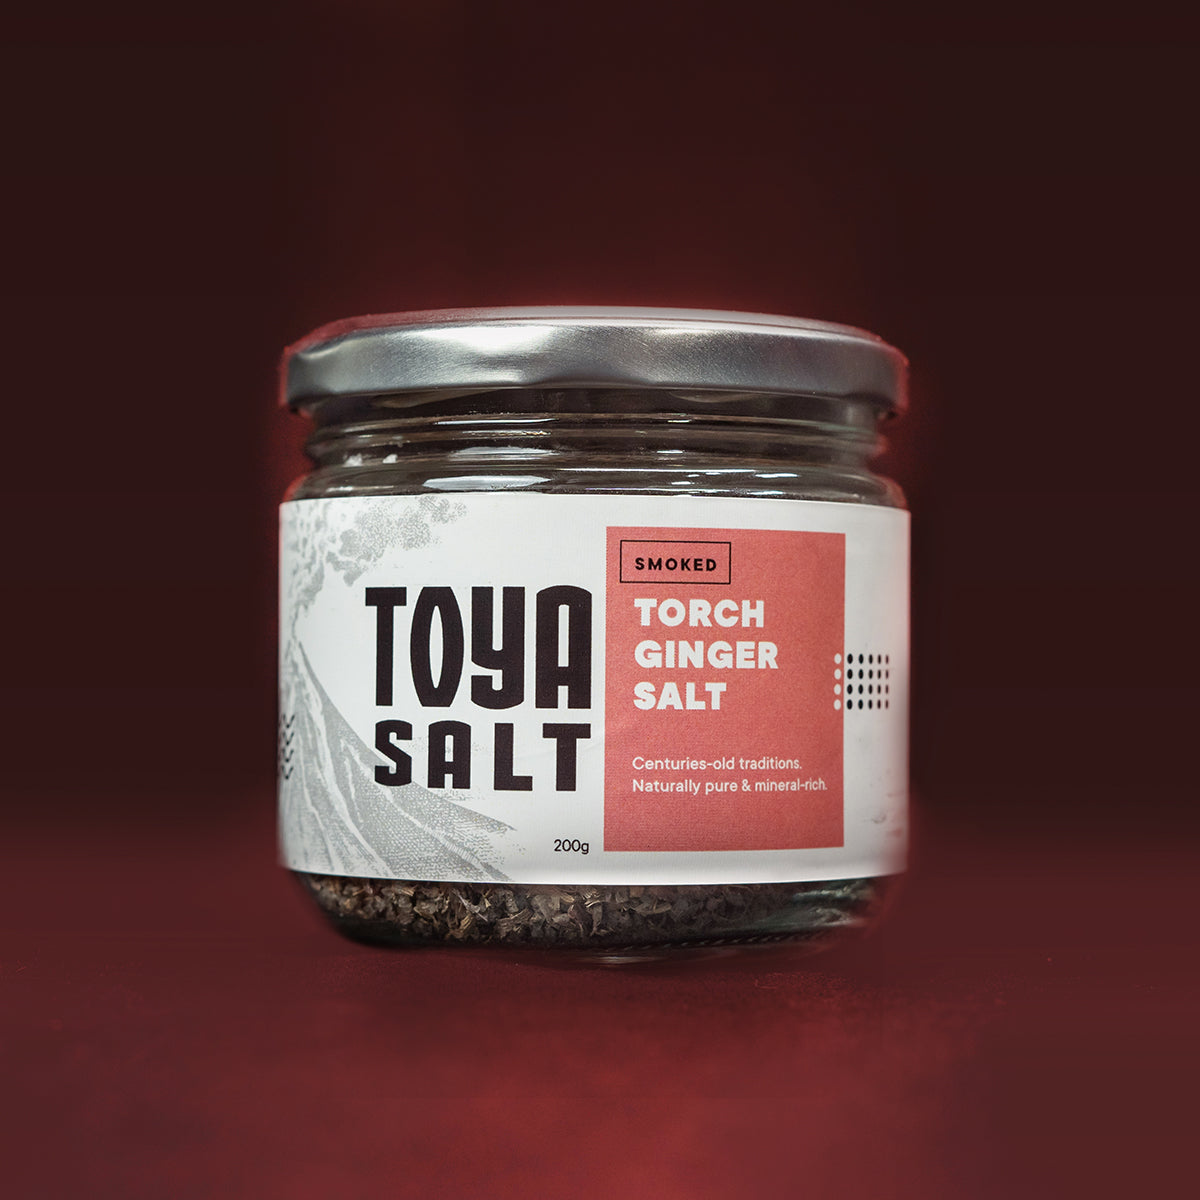 Smoked Torch Ginger Salt - Toya Salt